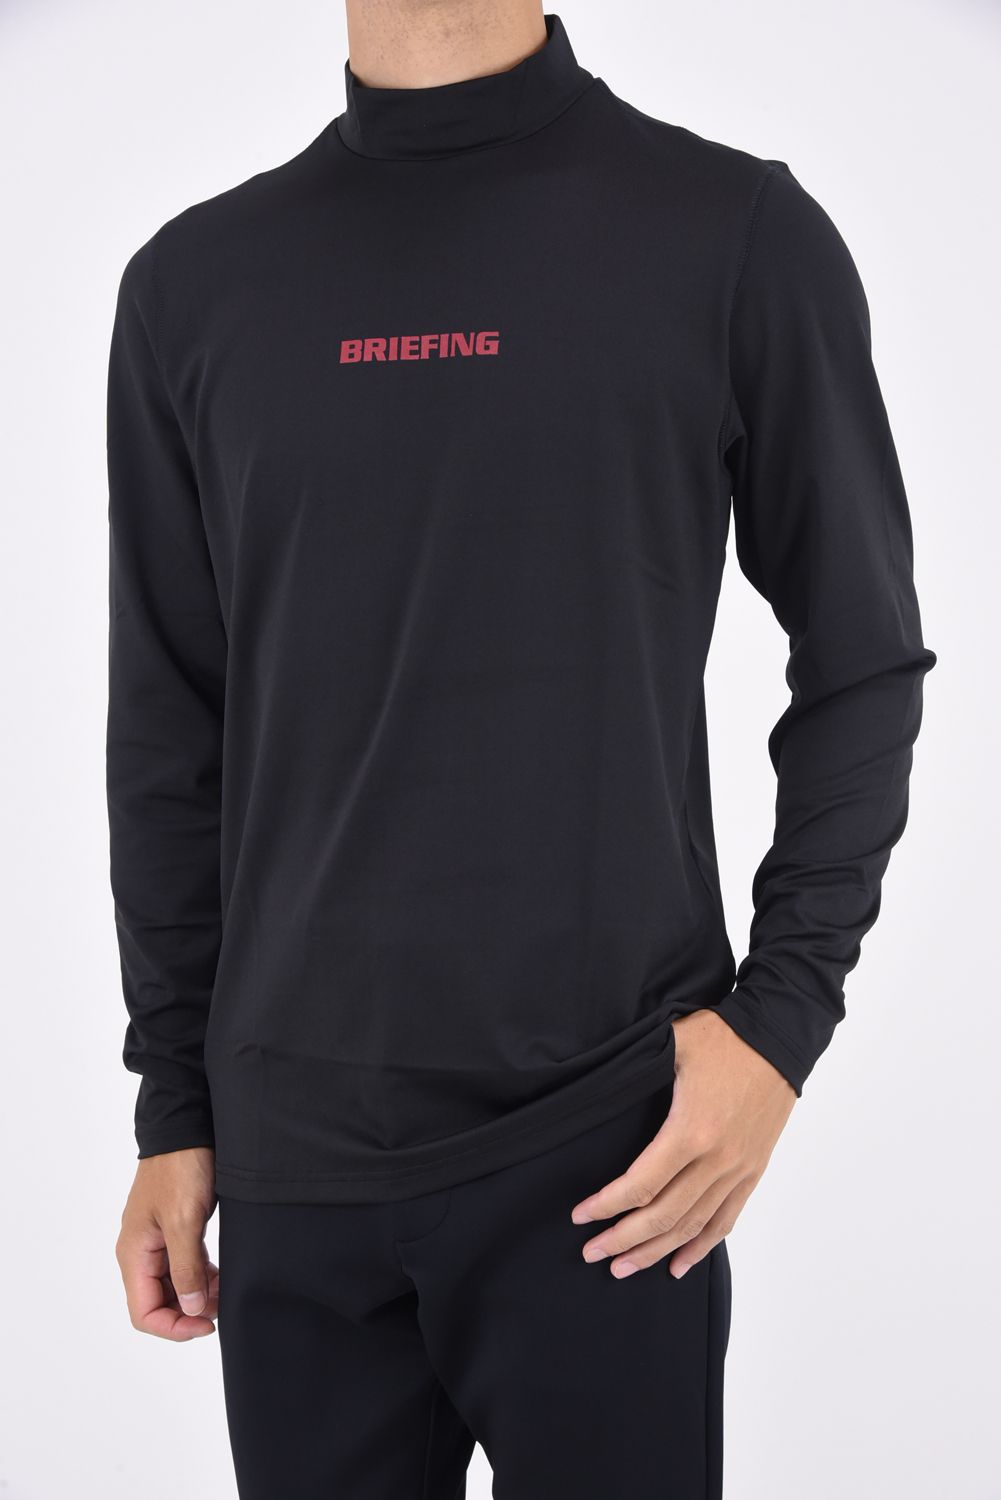 BRIEFING - MENS TOUR LS HIGH NECK BBG231 / ブランドロゴ ロング ...